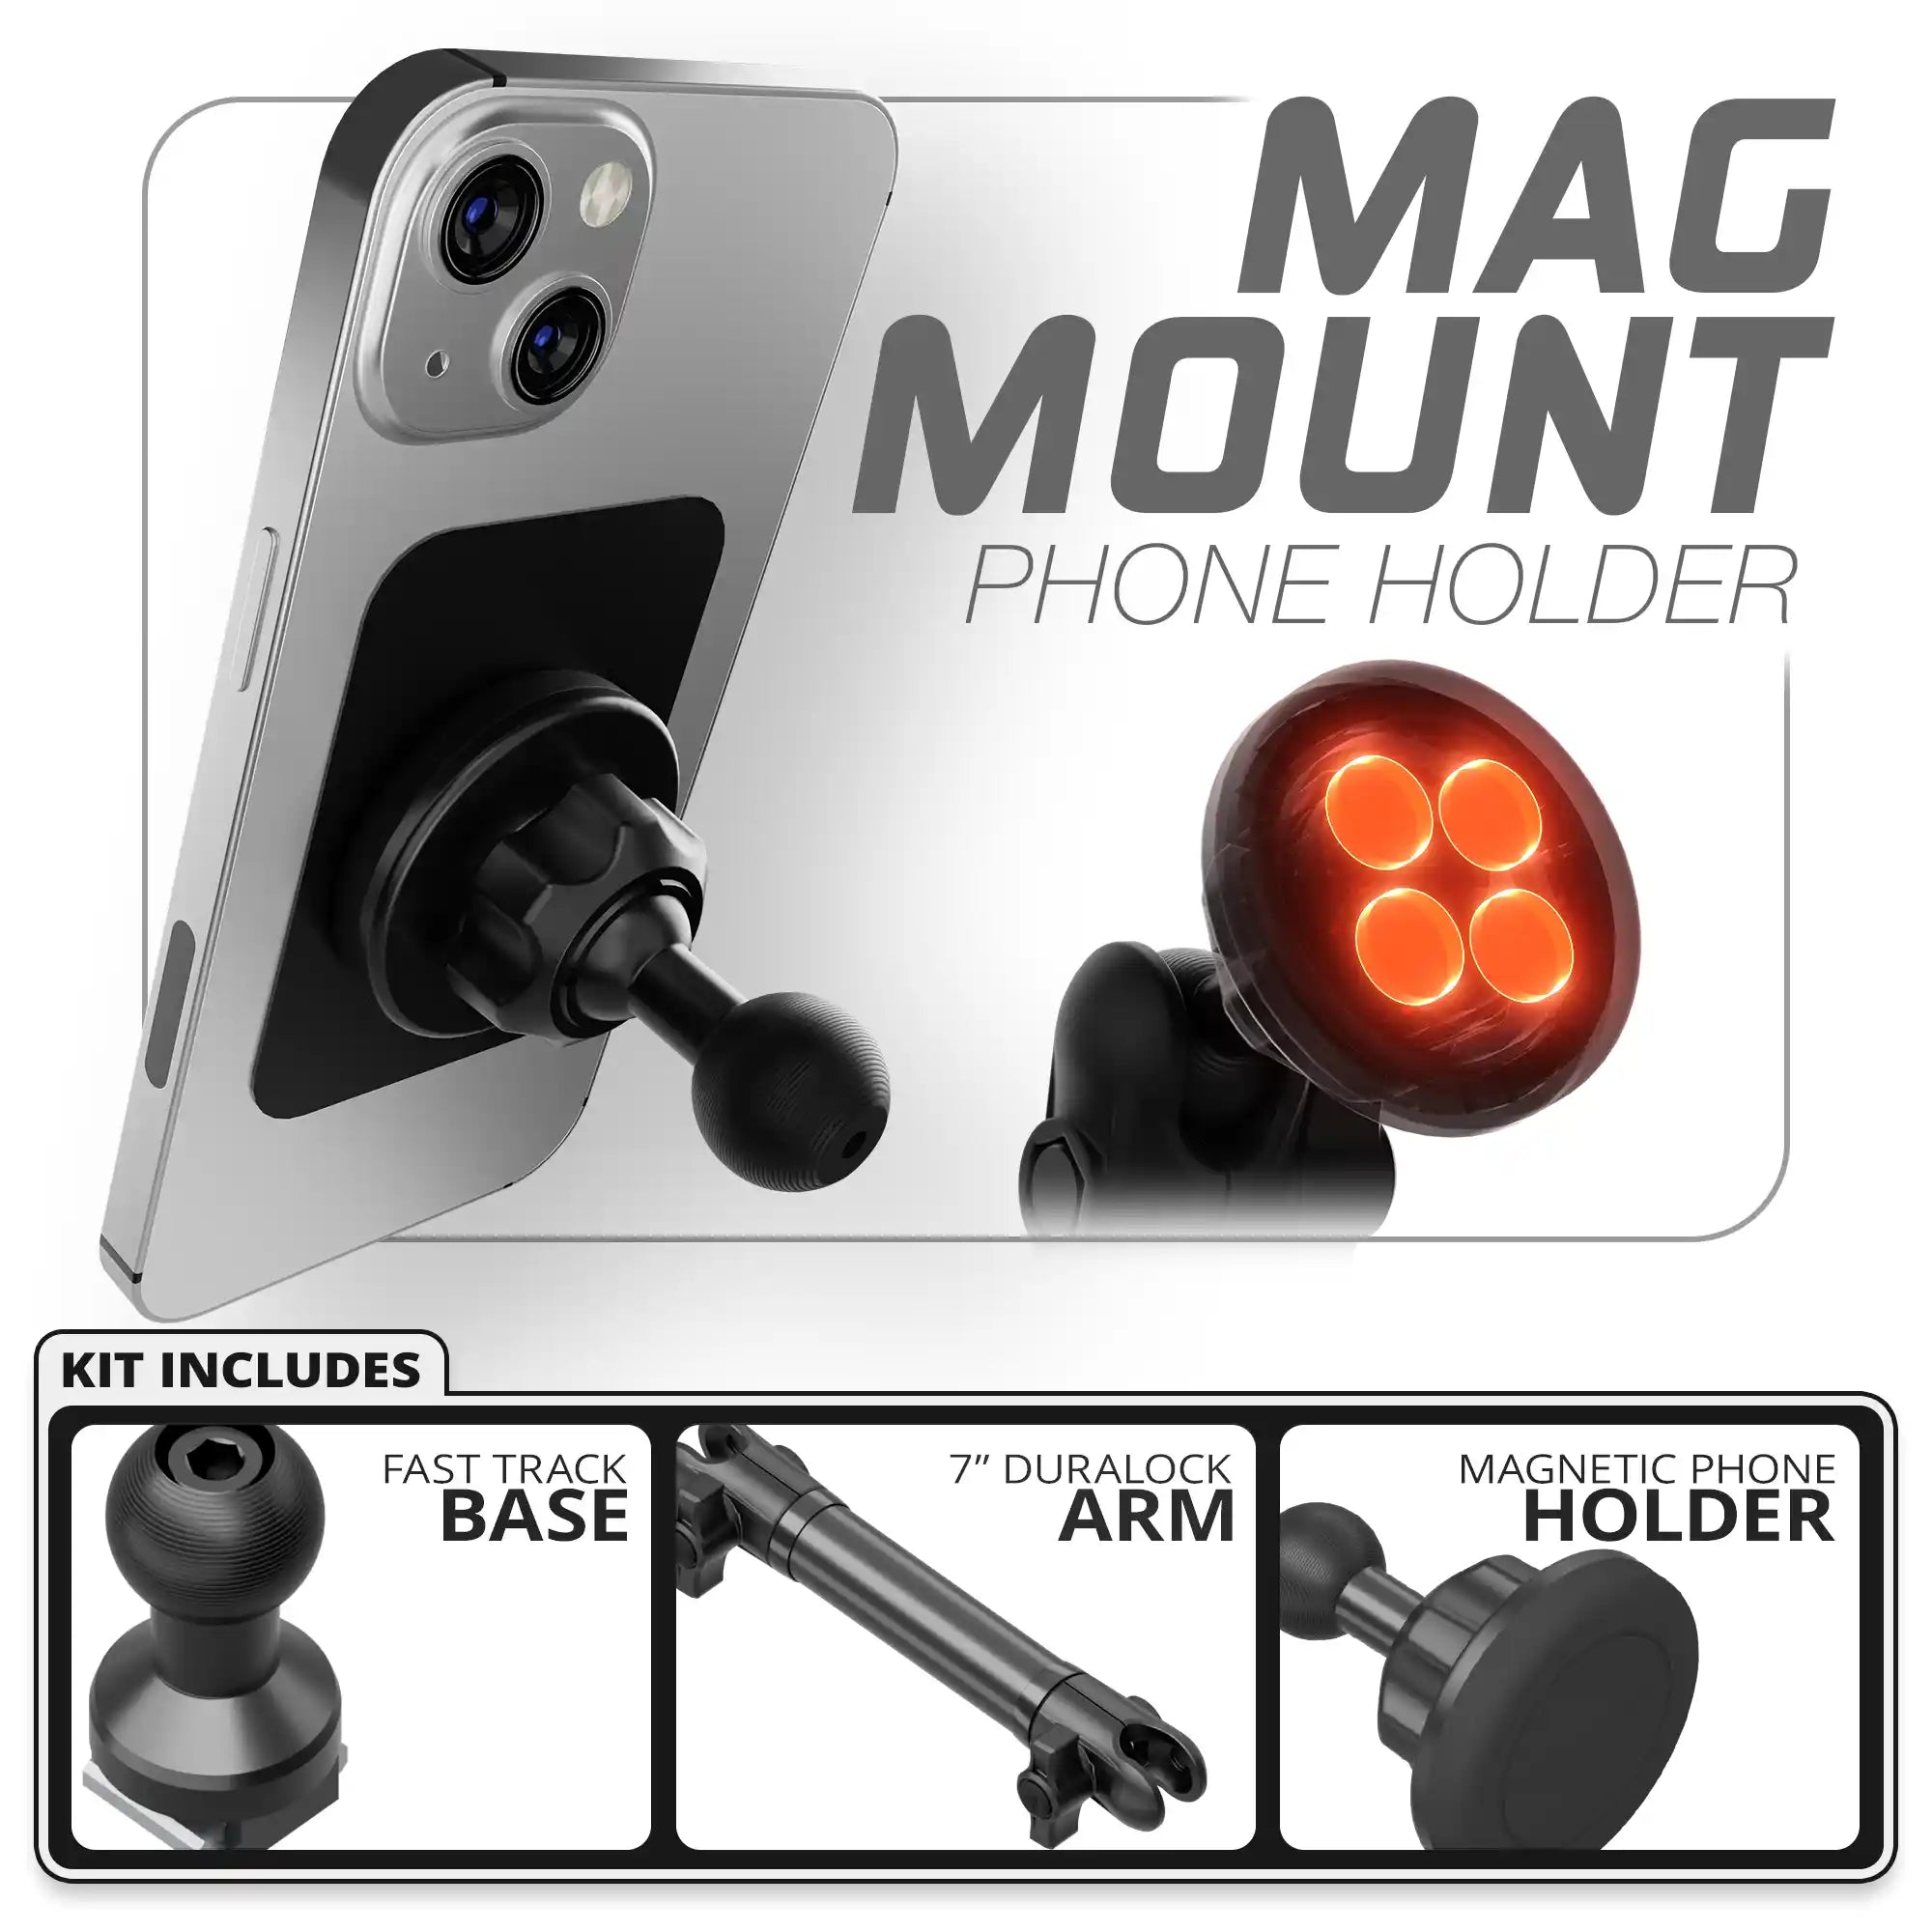 Magnetic Phone Holder | Fast Track Base | 7" DuraLock Arm